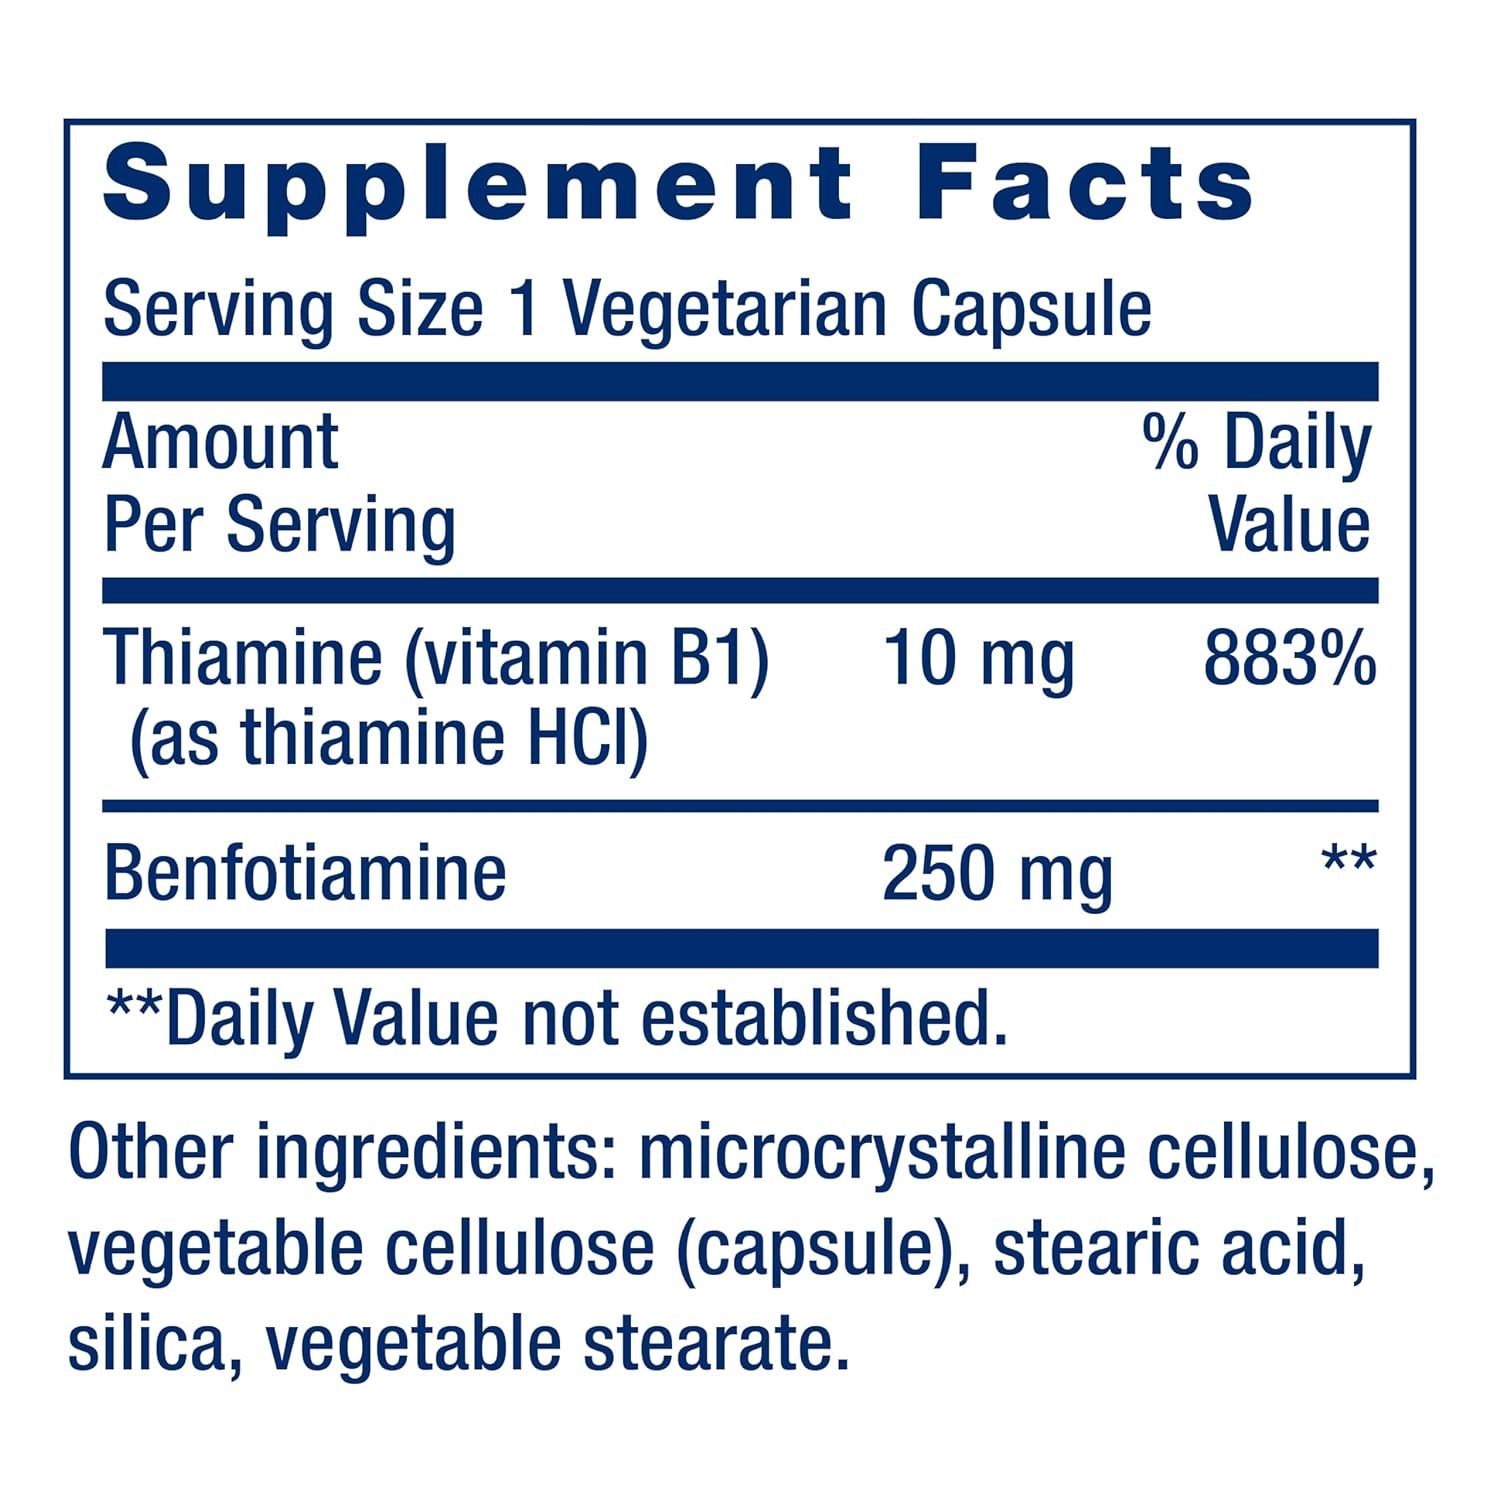 Life Extension Mega Benfotiamine, 250 Mg, a Fat-Soluble Form of Thiamine,Ultra-Bioavailable Vitamin B1, High Potency, Gluten-Free, Non-Gmo, Vegetarian, 120 Capsules